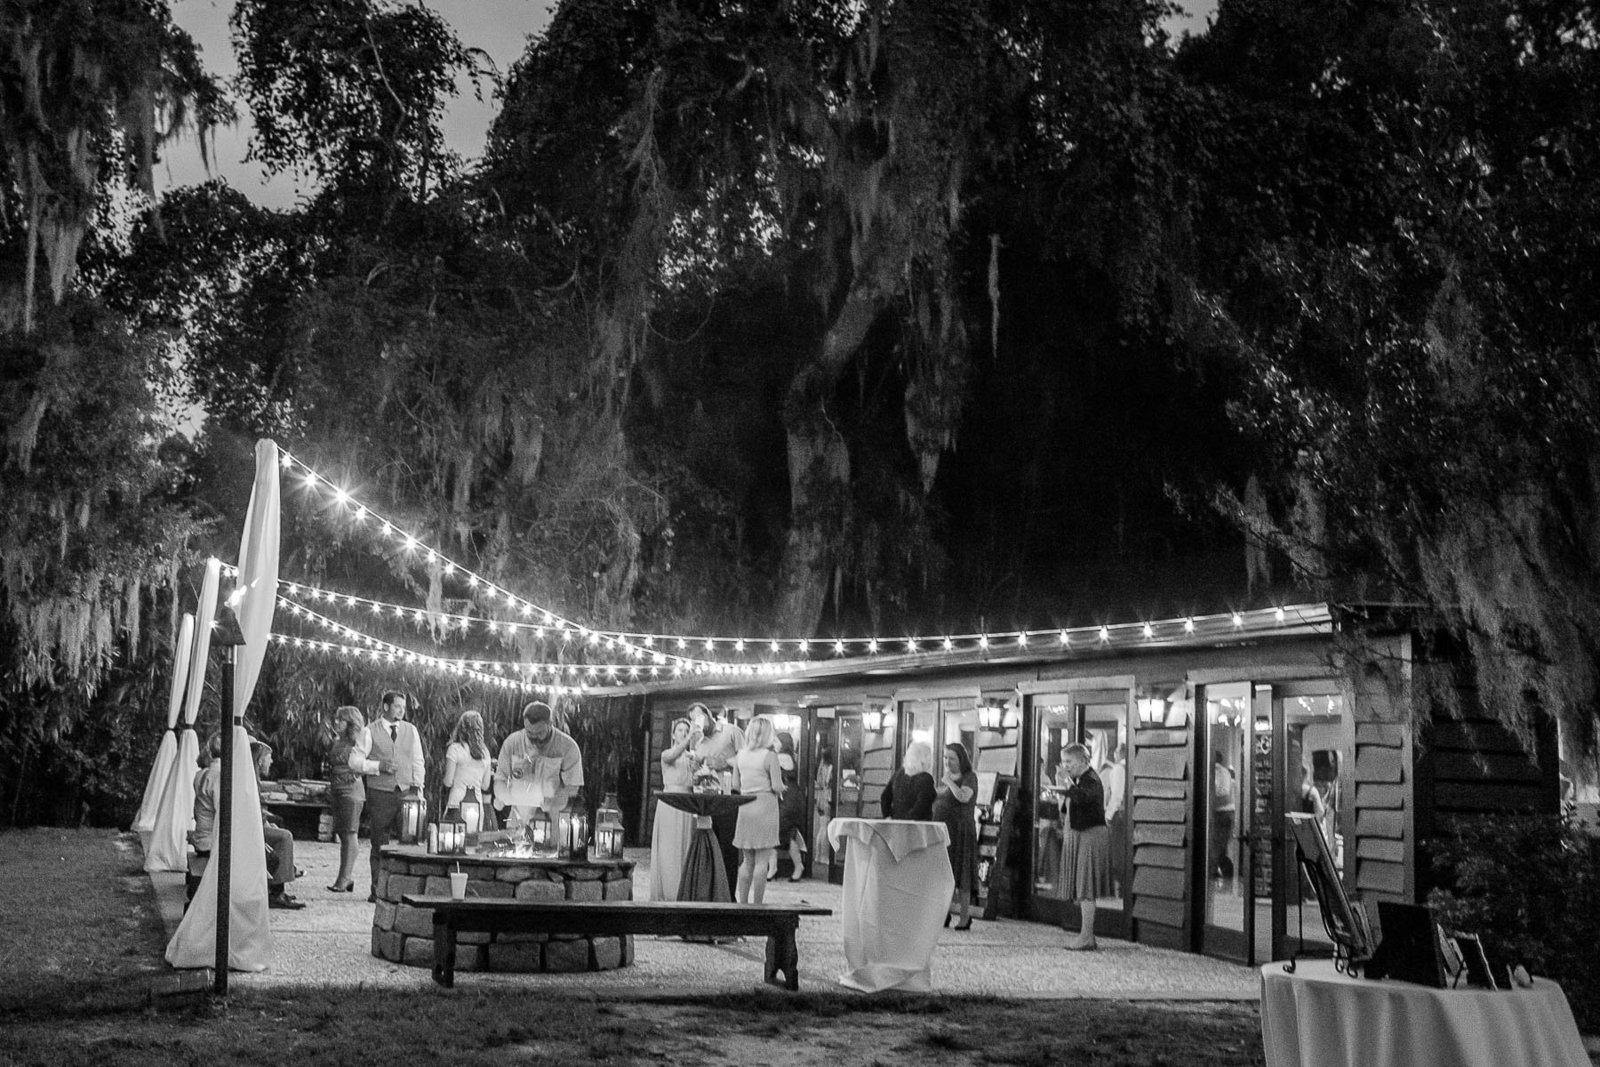 Cabin is lit up at night, Magnolia Plantation, Charleston, South Carolina